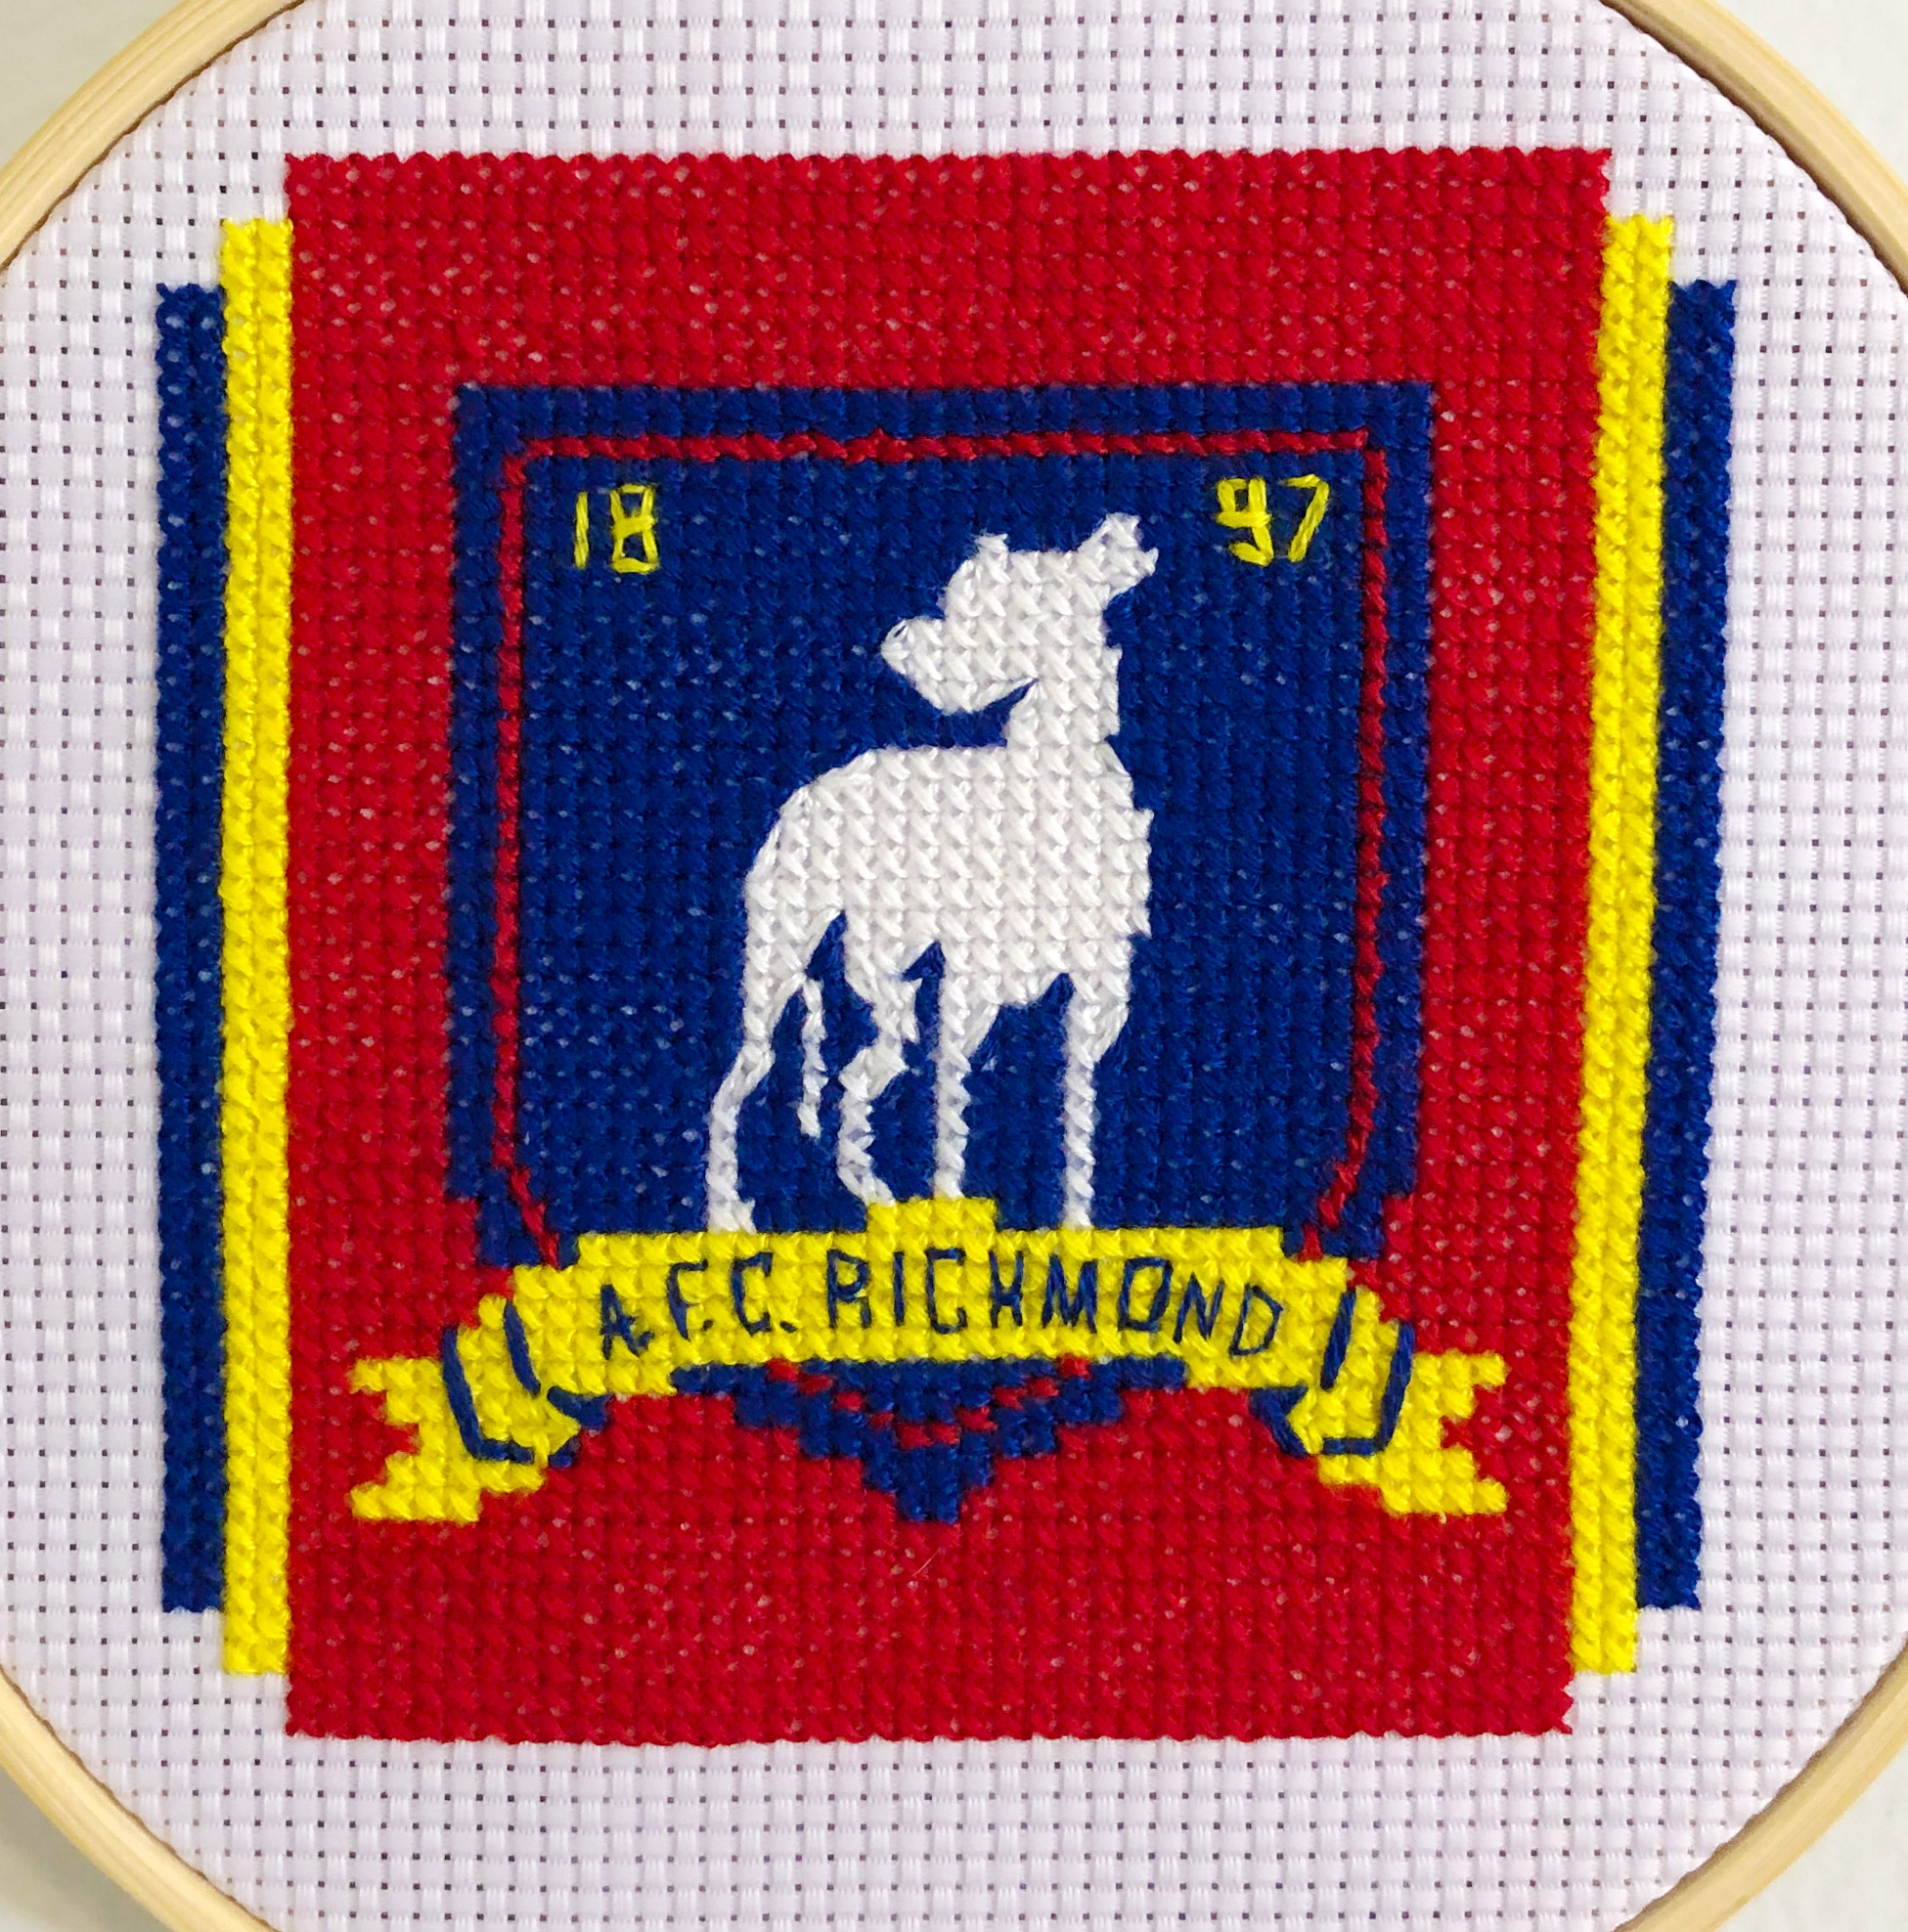 AFC Richmond / Ted Lasso cross stitch pattern